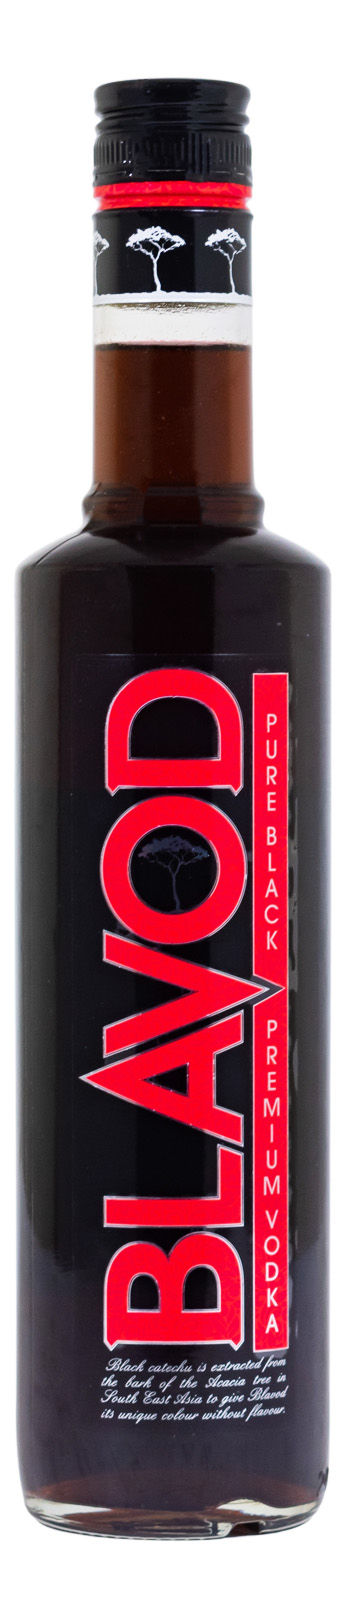 Blavod Black Vodka - 0,5L 40% vol